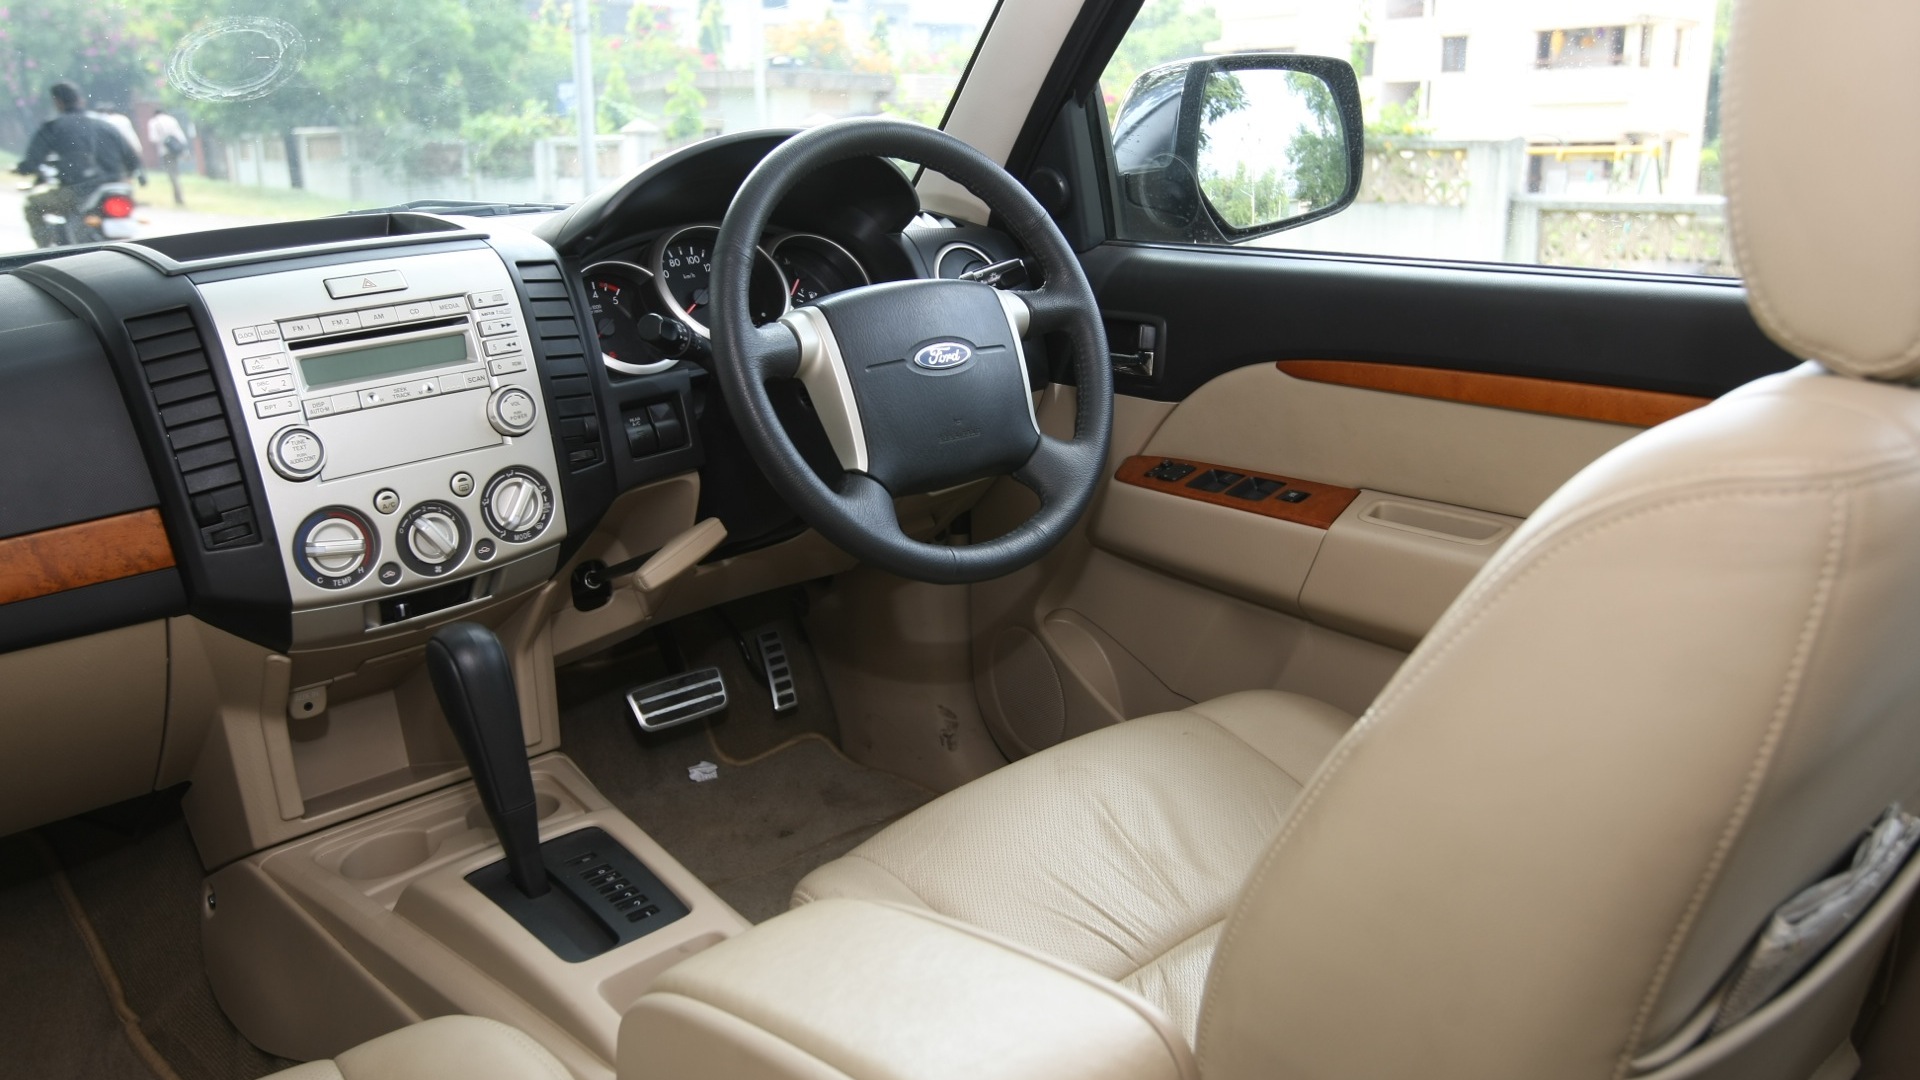 Ford Endeavour 2012 Tdci 4x2 2 5 Xlt Interior Car Photos